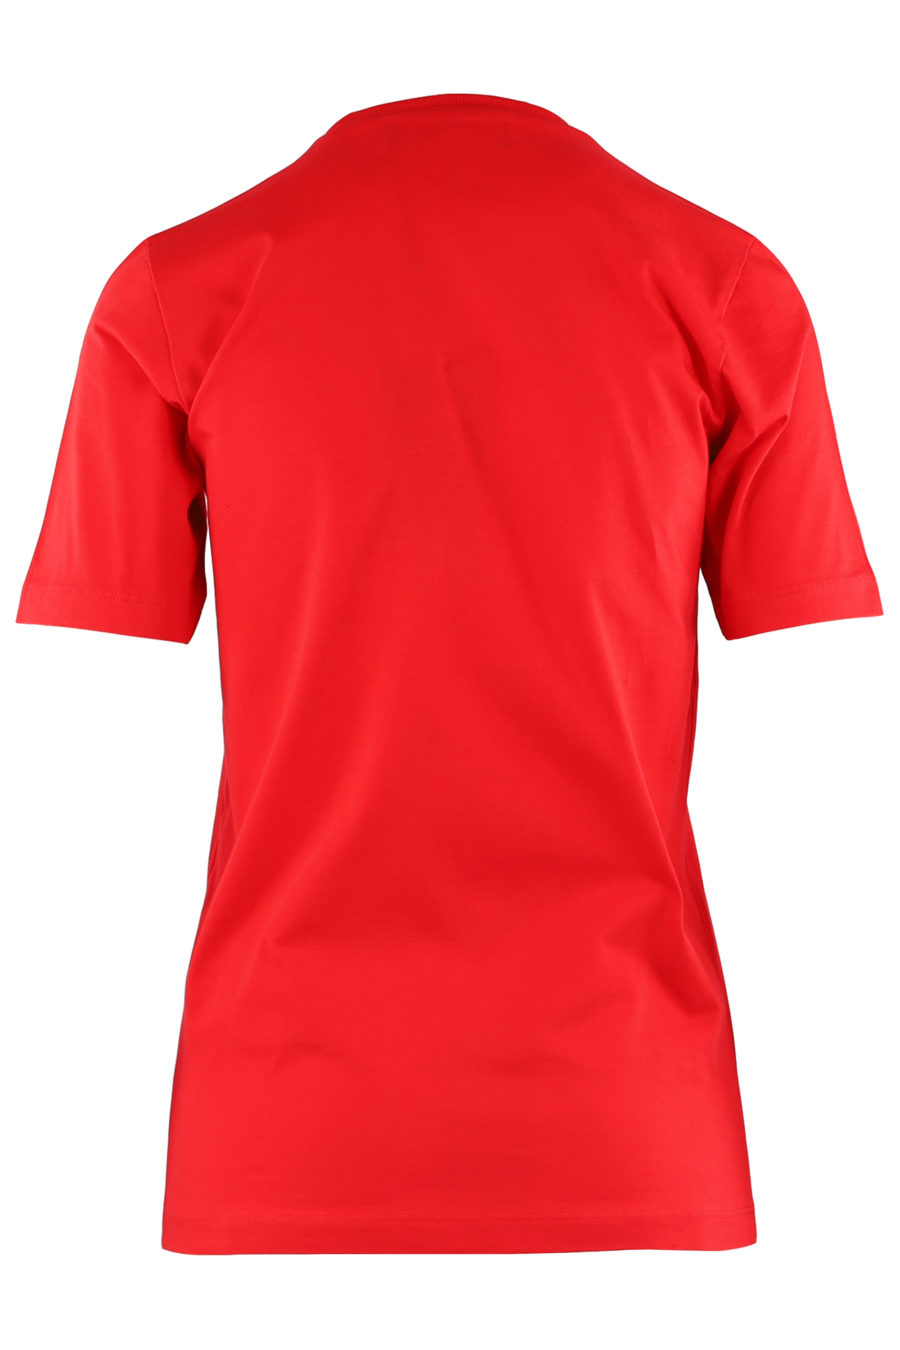 Camiseta roja con logo blanco "Icon" - 061f0ee81fc51e60436167b7a14d57c30c81eb69